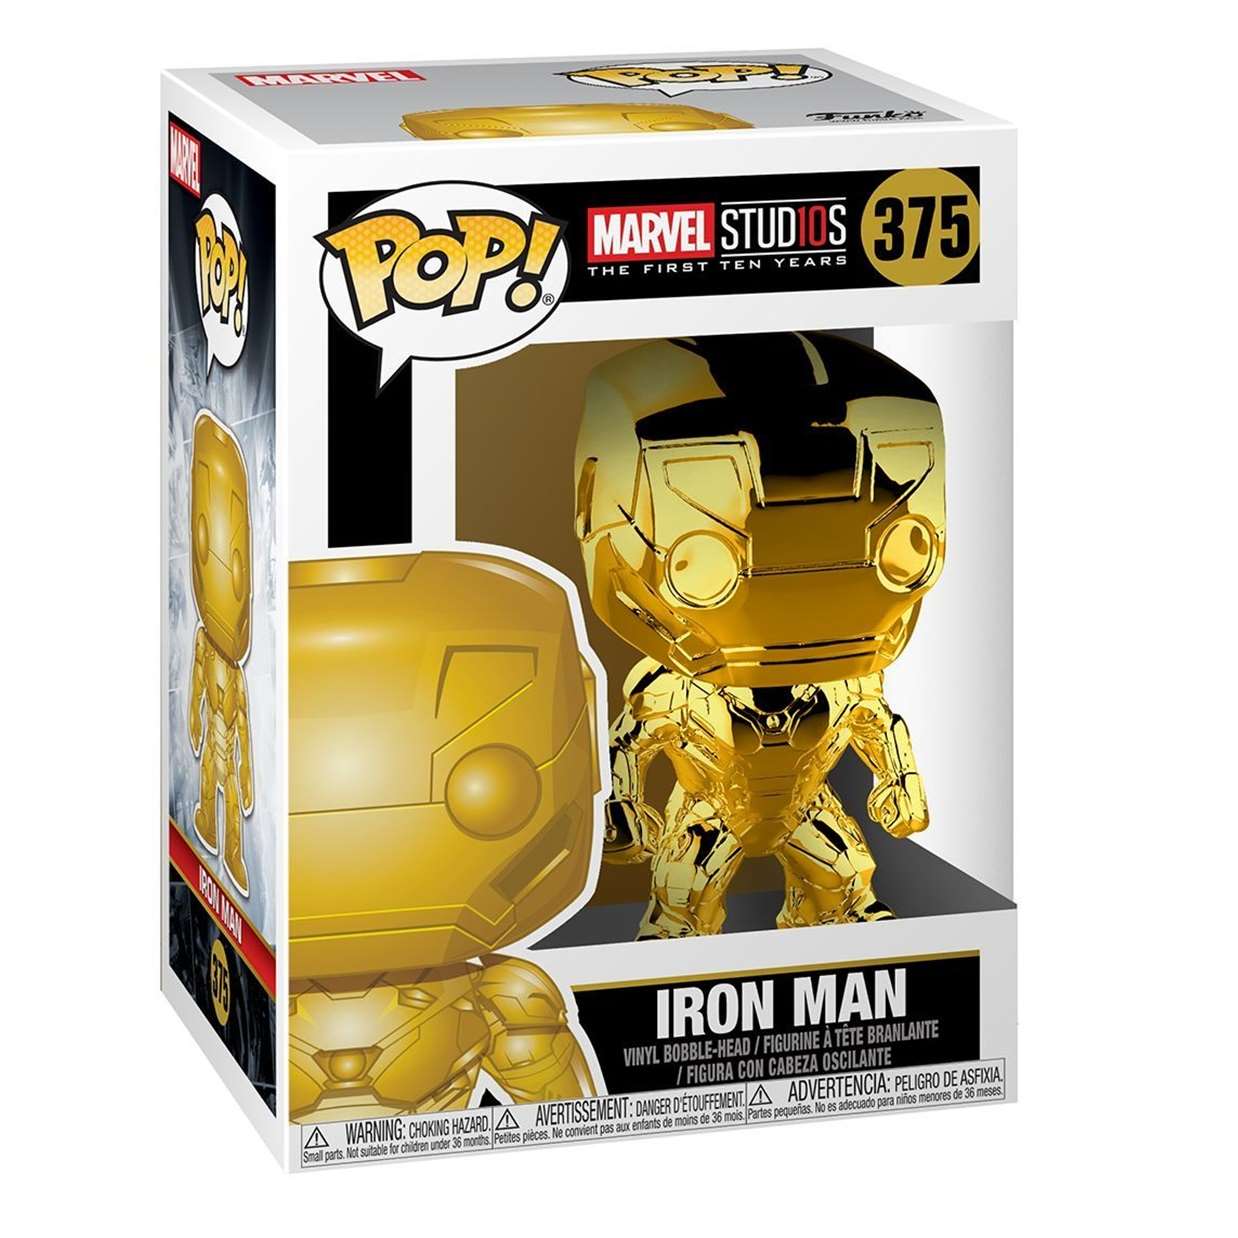 Iron Man #375 Figura Marvel Studios 10th Anniversary